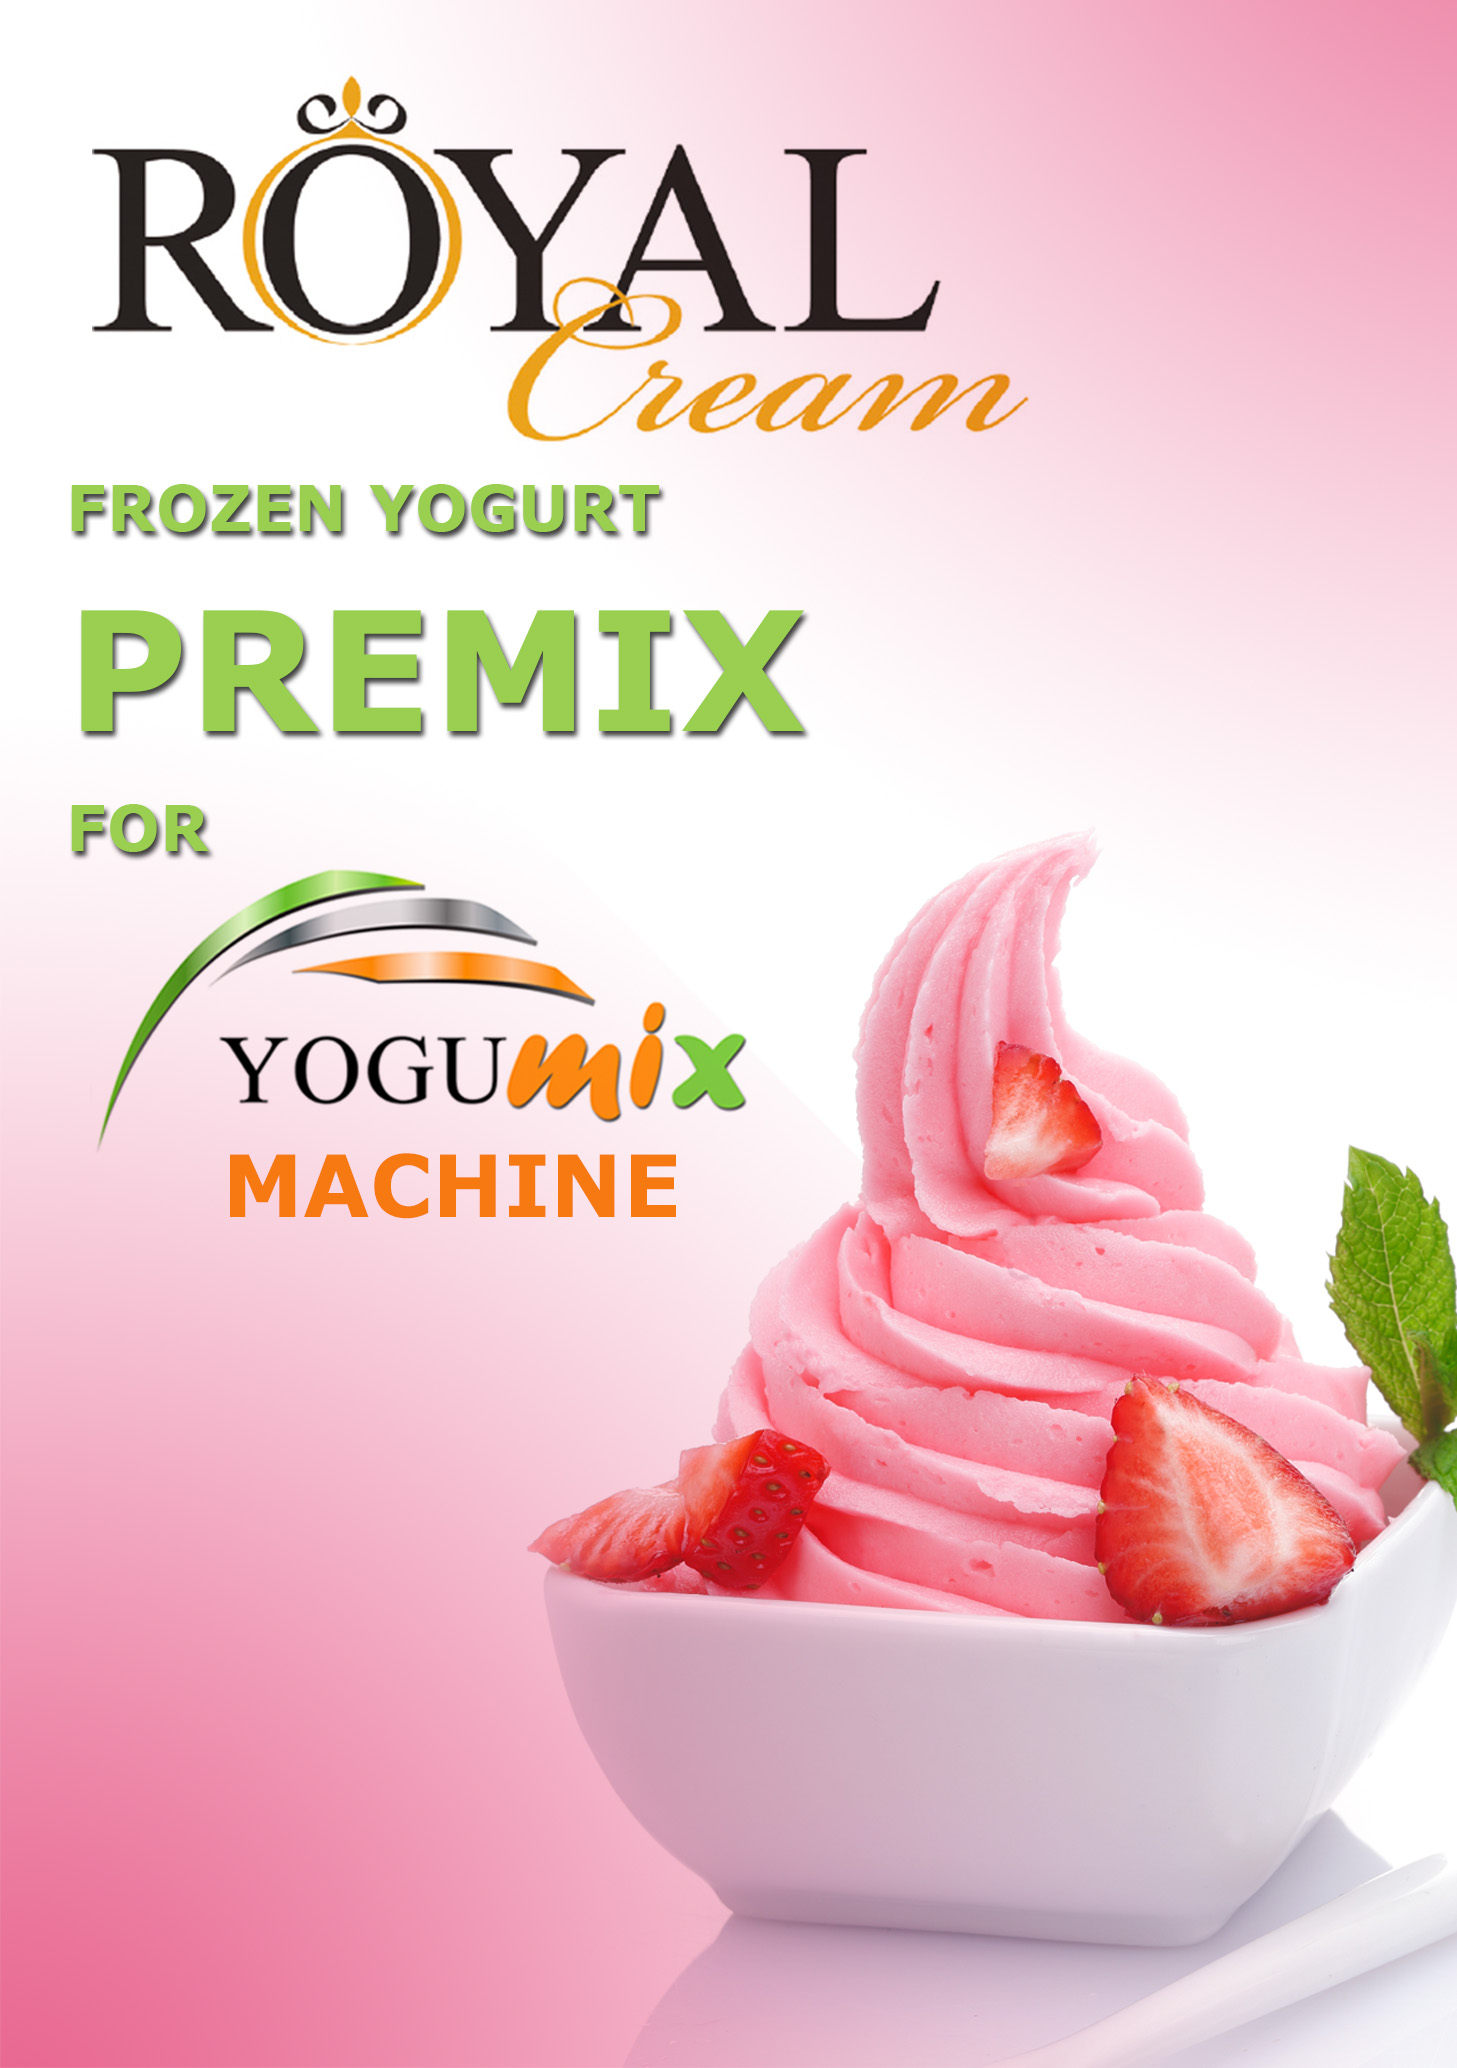 What Type of Frozen Yogurt Machine Should I Buy?